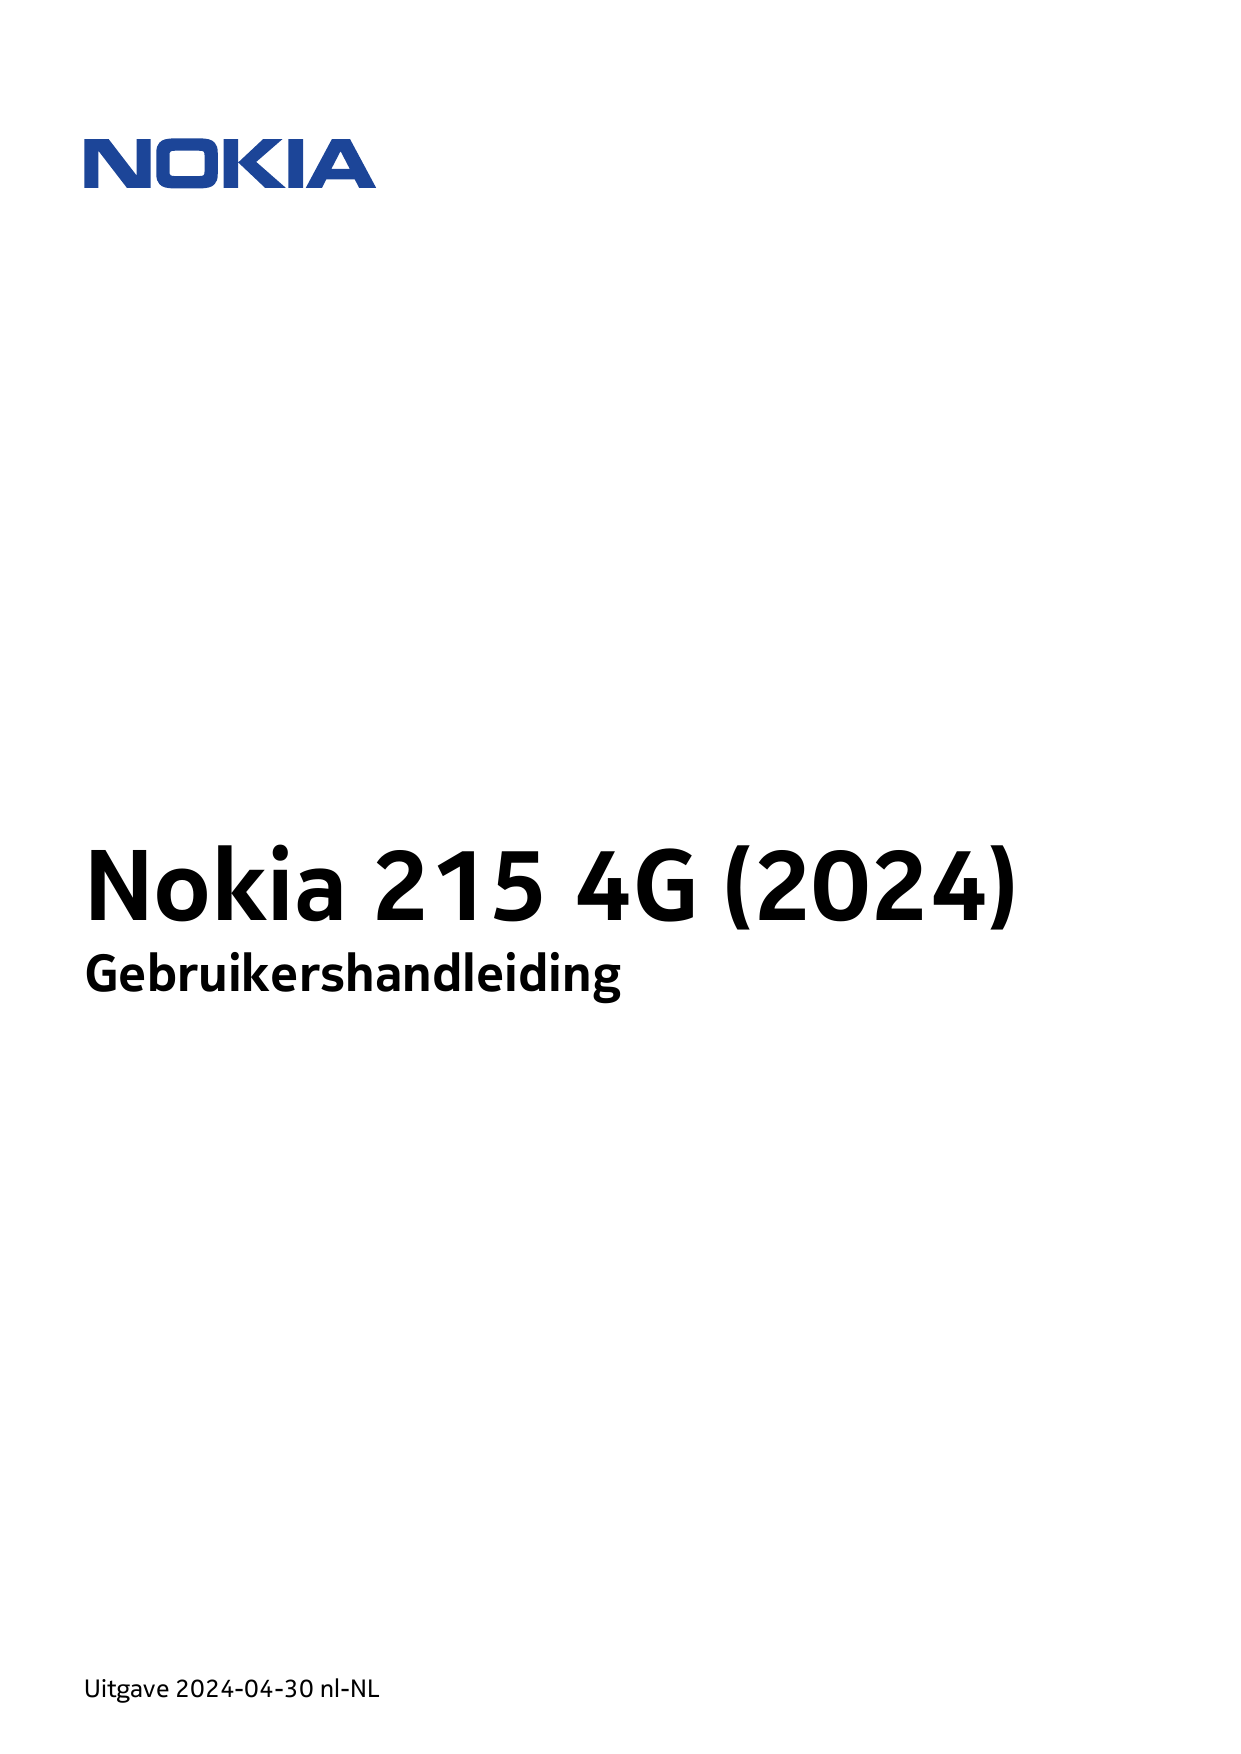 Nokia 215 4G (2024)GebruikershandleidingUitgave 2024-04-30 nl-NL